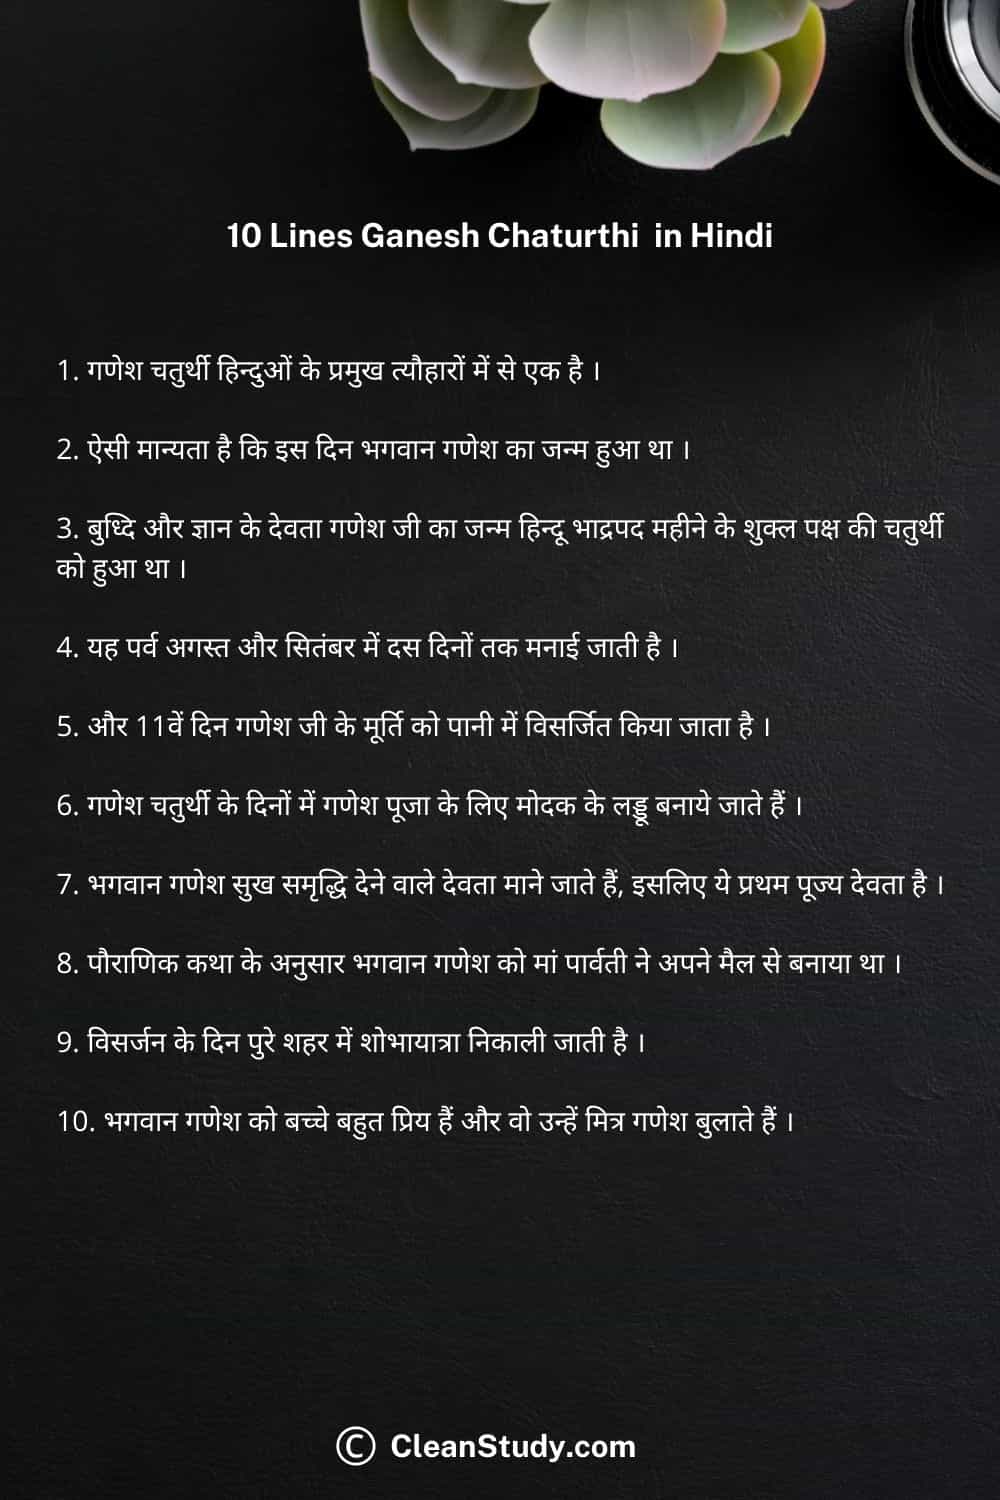 10 lines on ganesh chaturthi in hindi